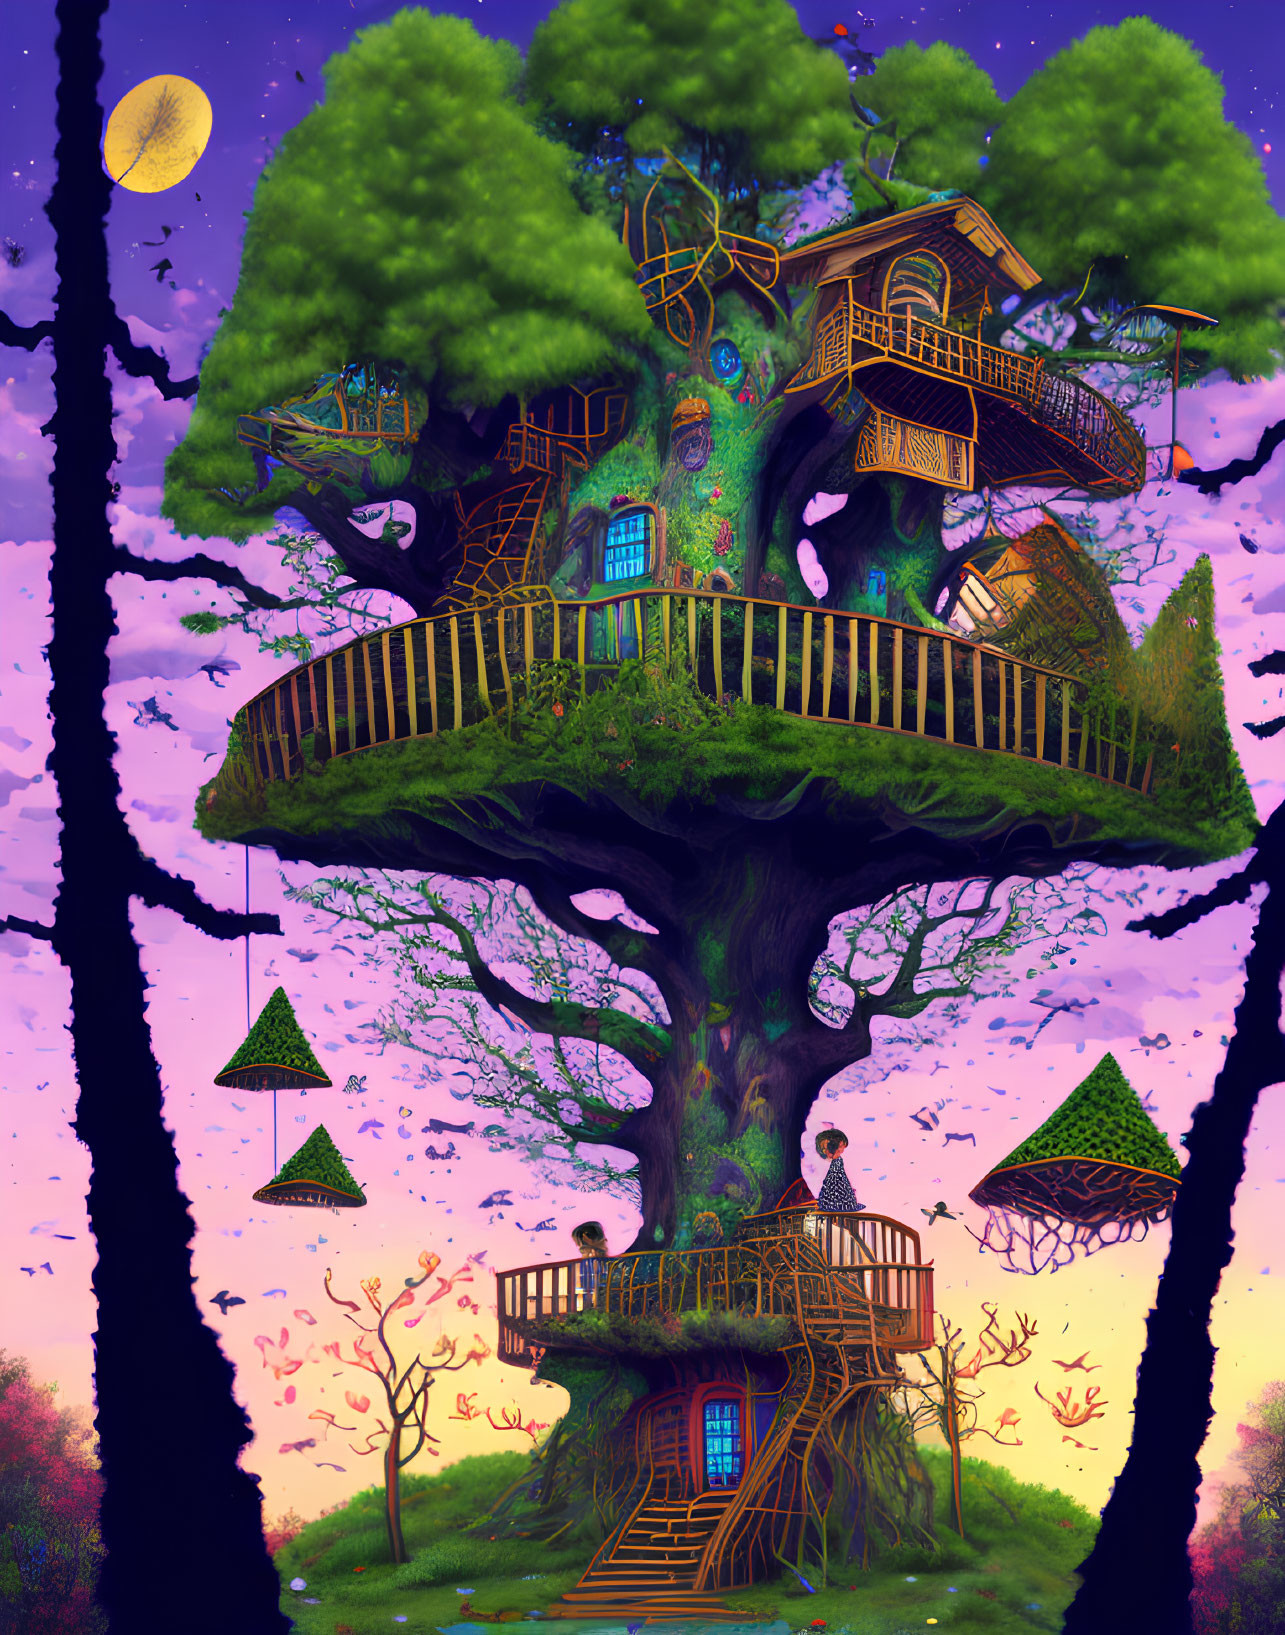 Detailed illustration of whimsical treehouse under purple sky